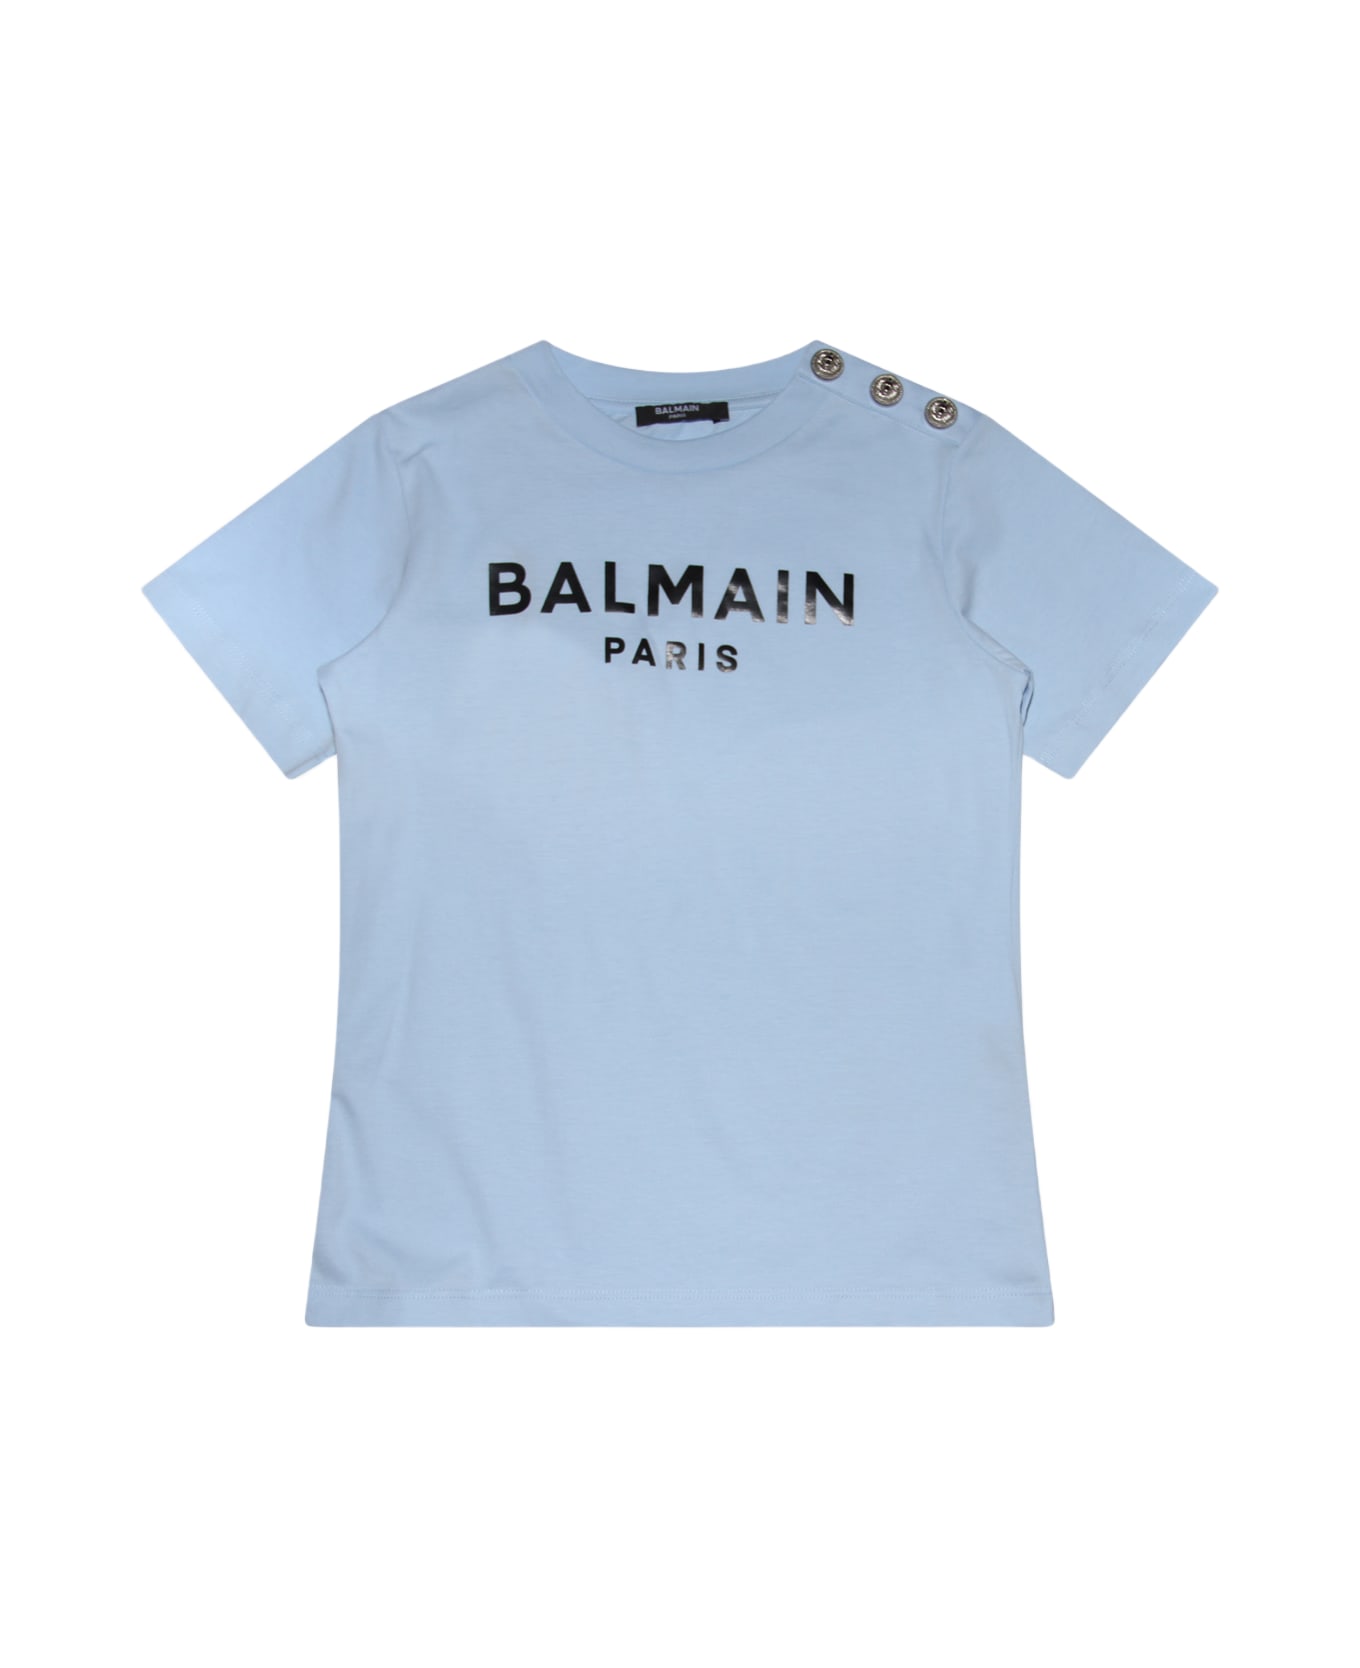 Balmain Light Blue And Black Cotton T-shirt - Blue